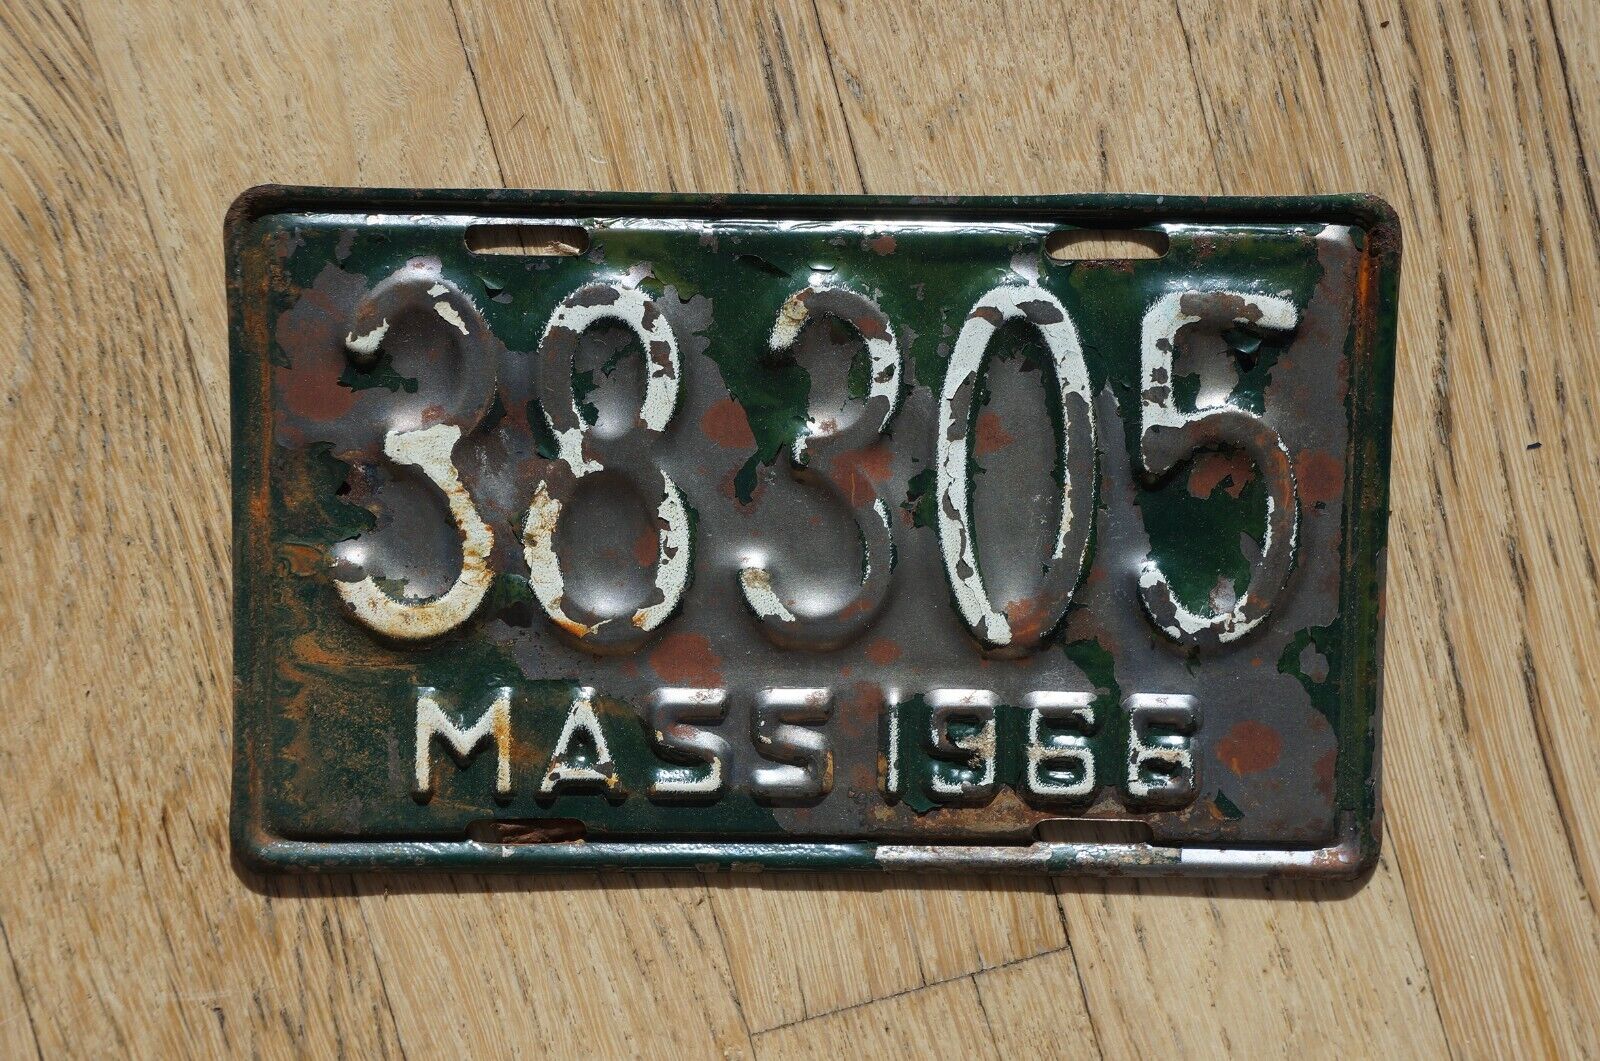 1966 Massachusetts MOTORCYCLE License Plate - Needs Repaint